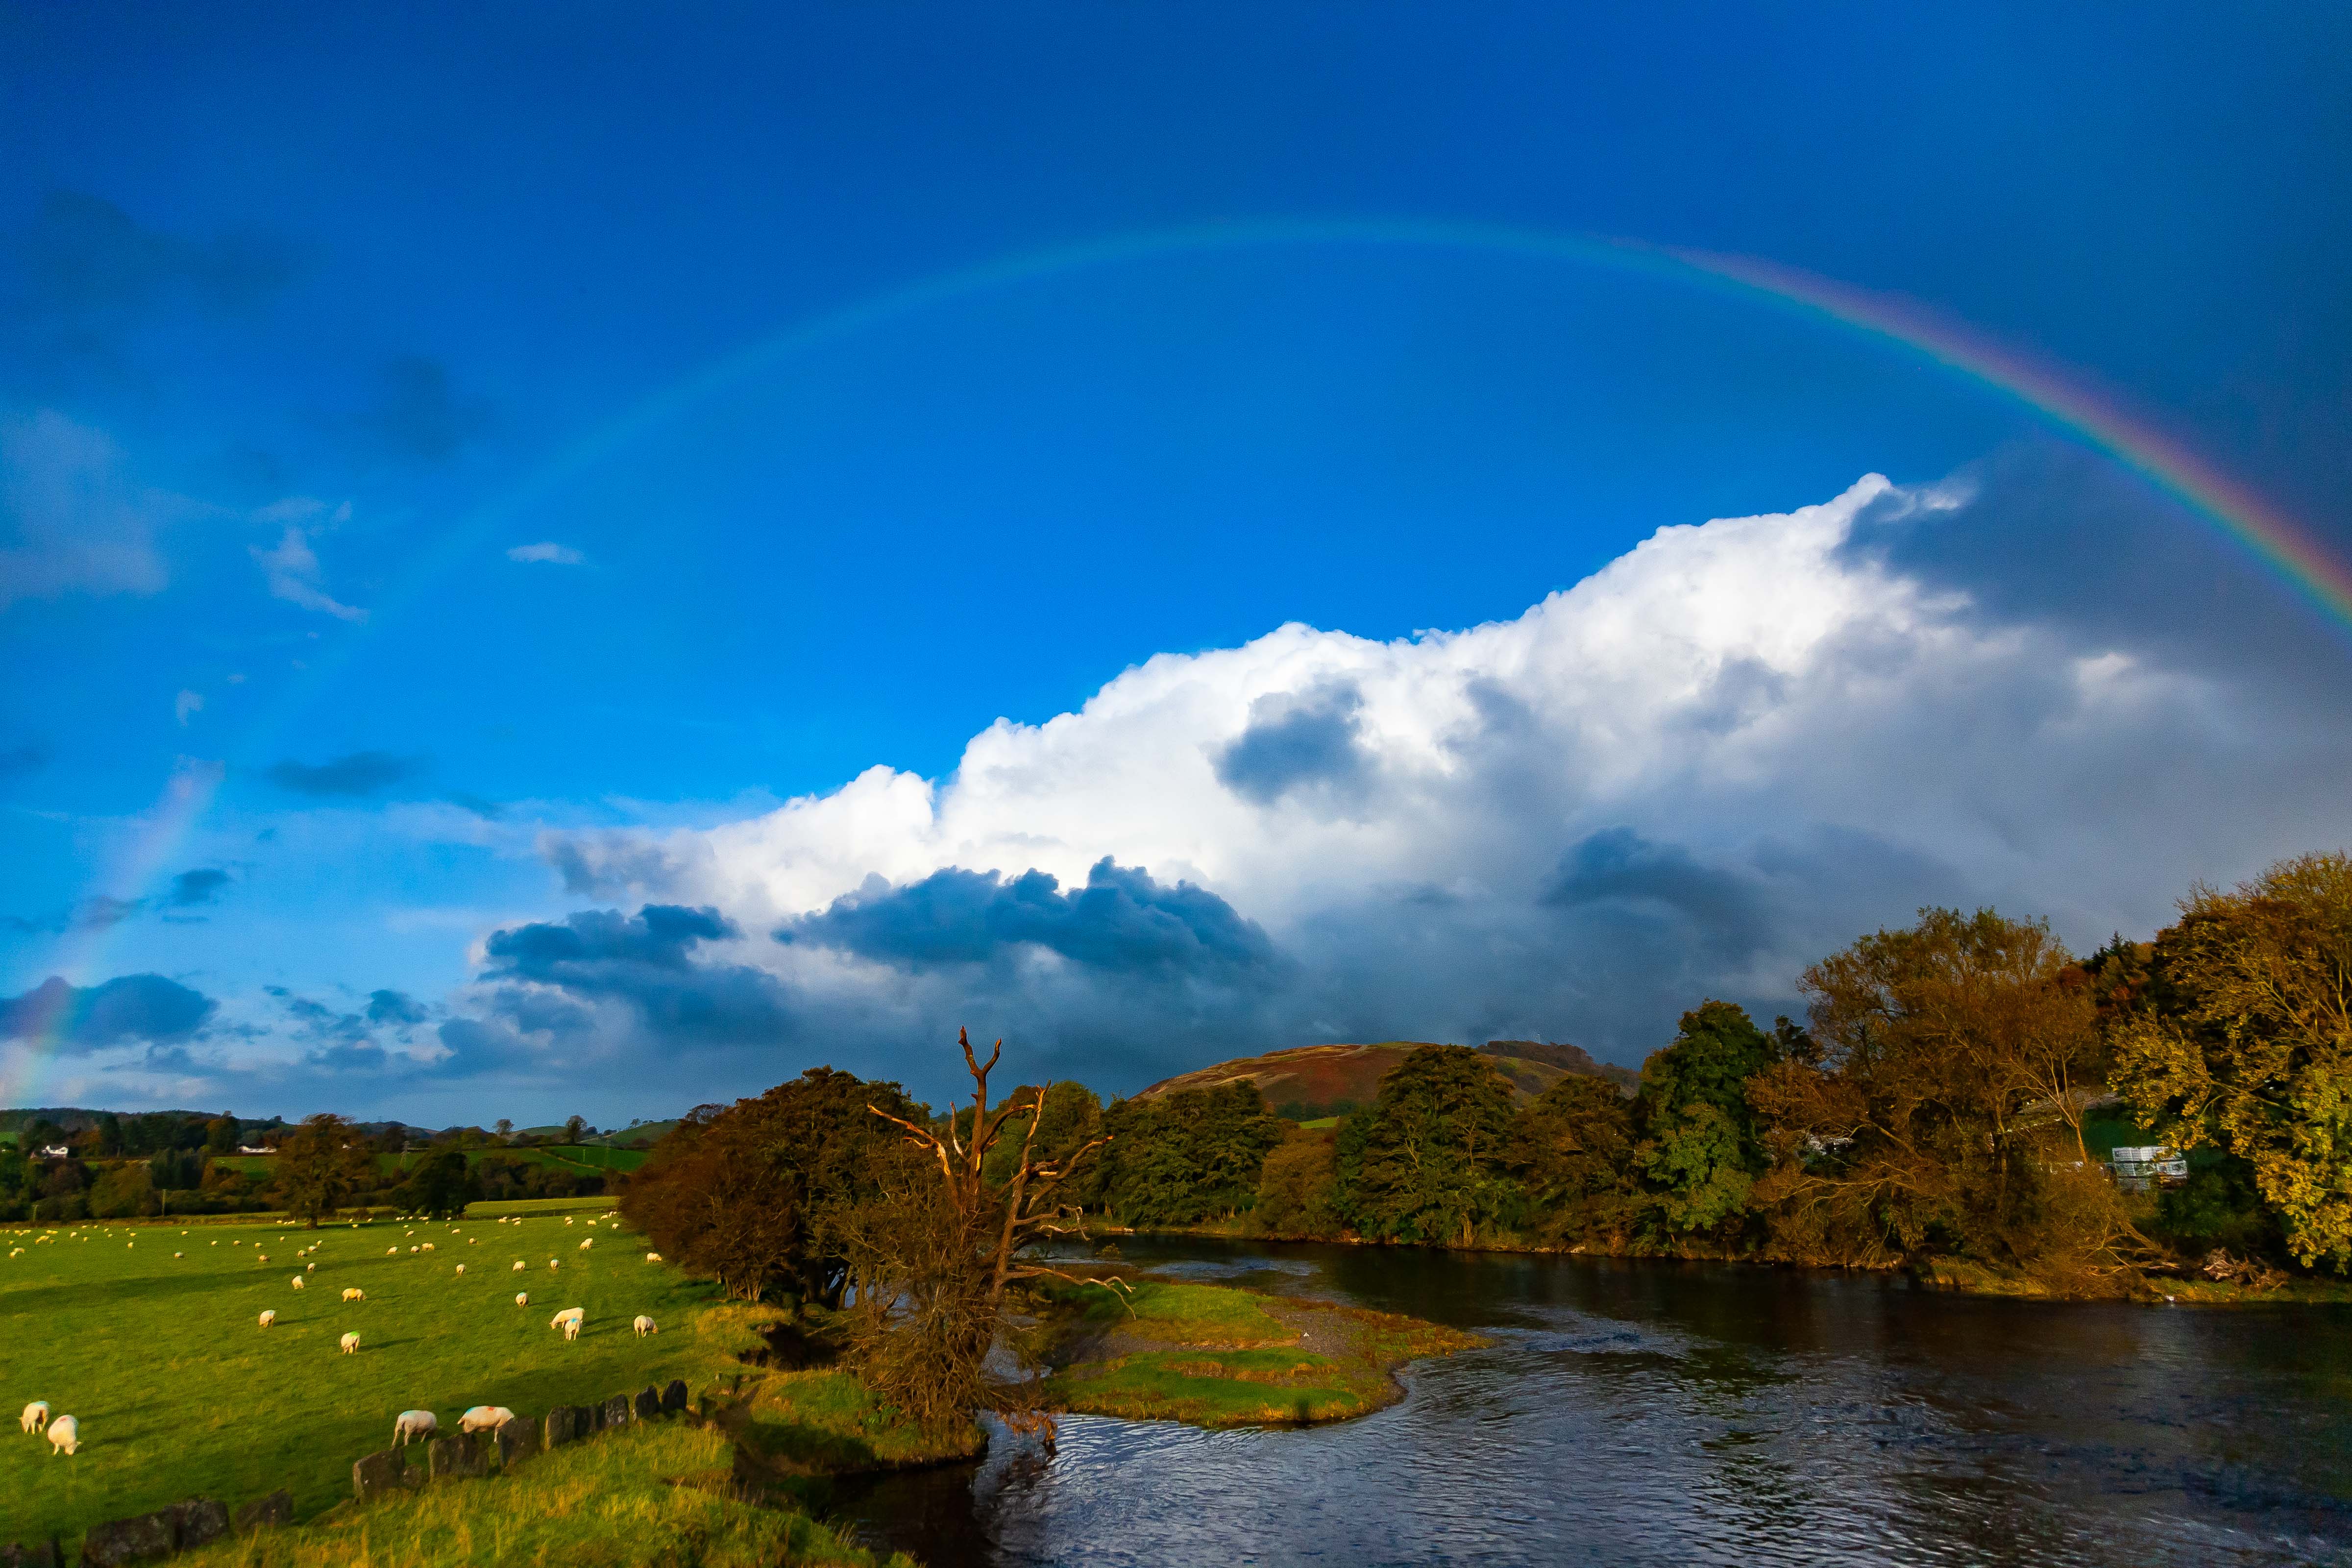 UK, Denbighshire Prov, Country Rainbow, 2009, IMG 6146